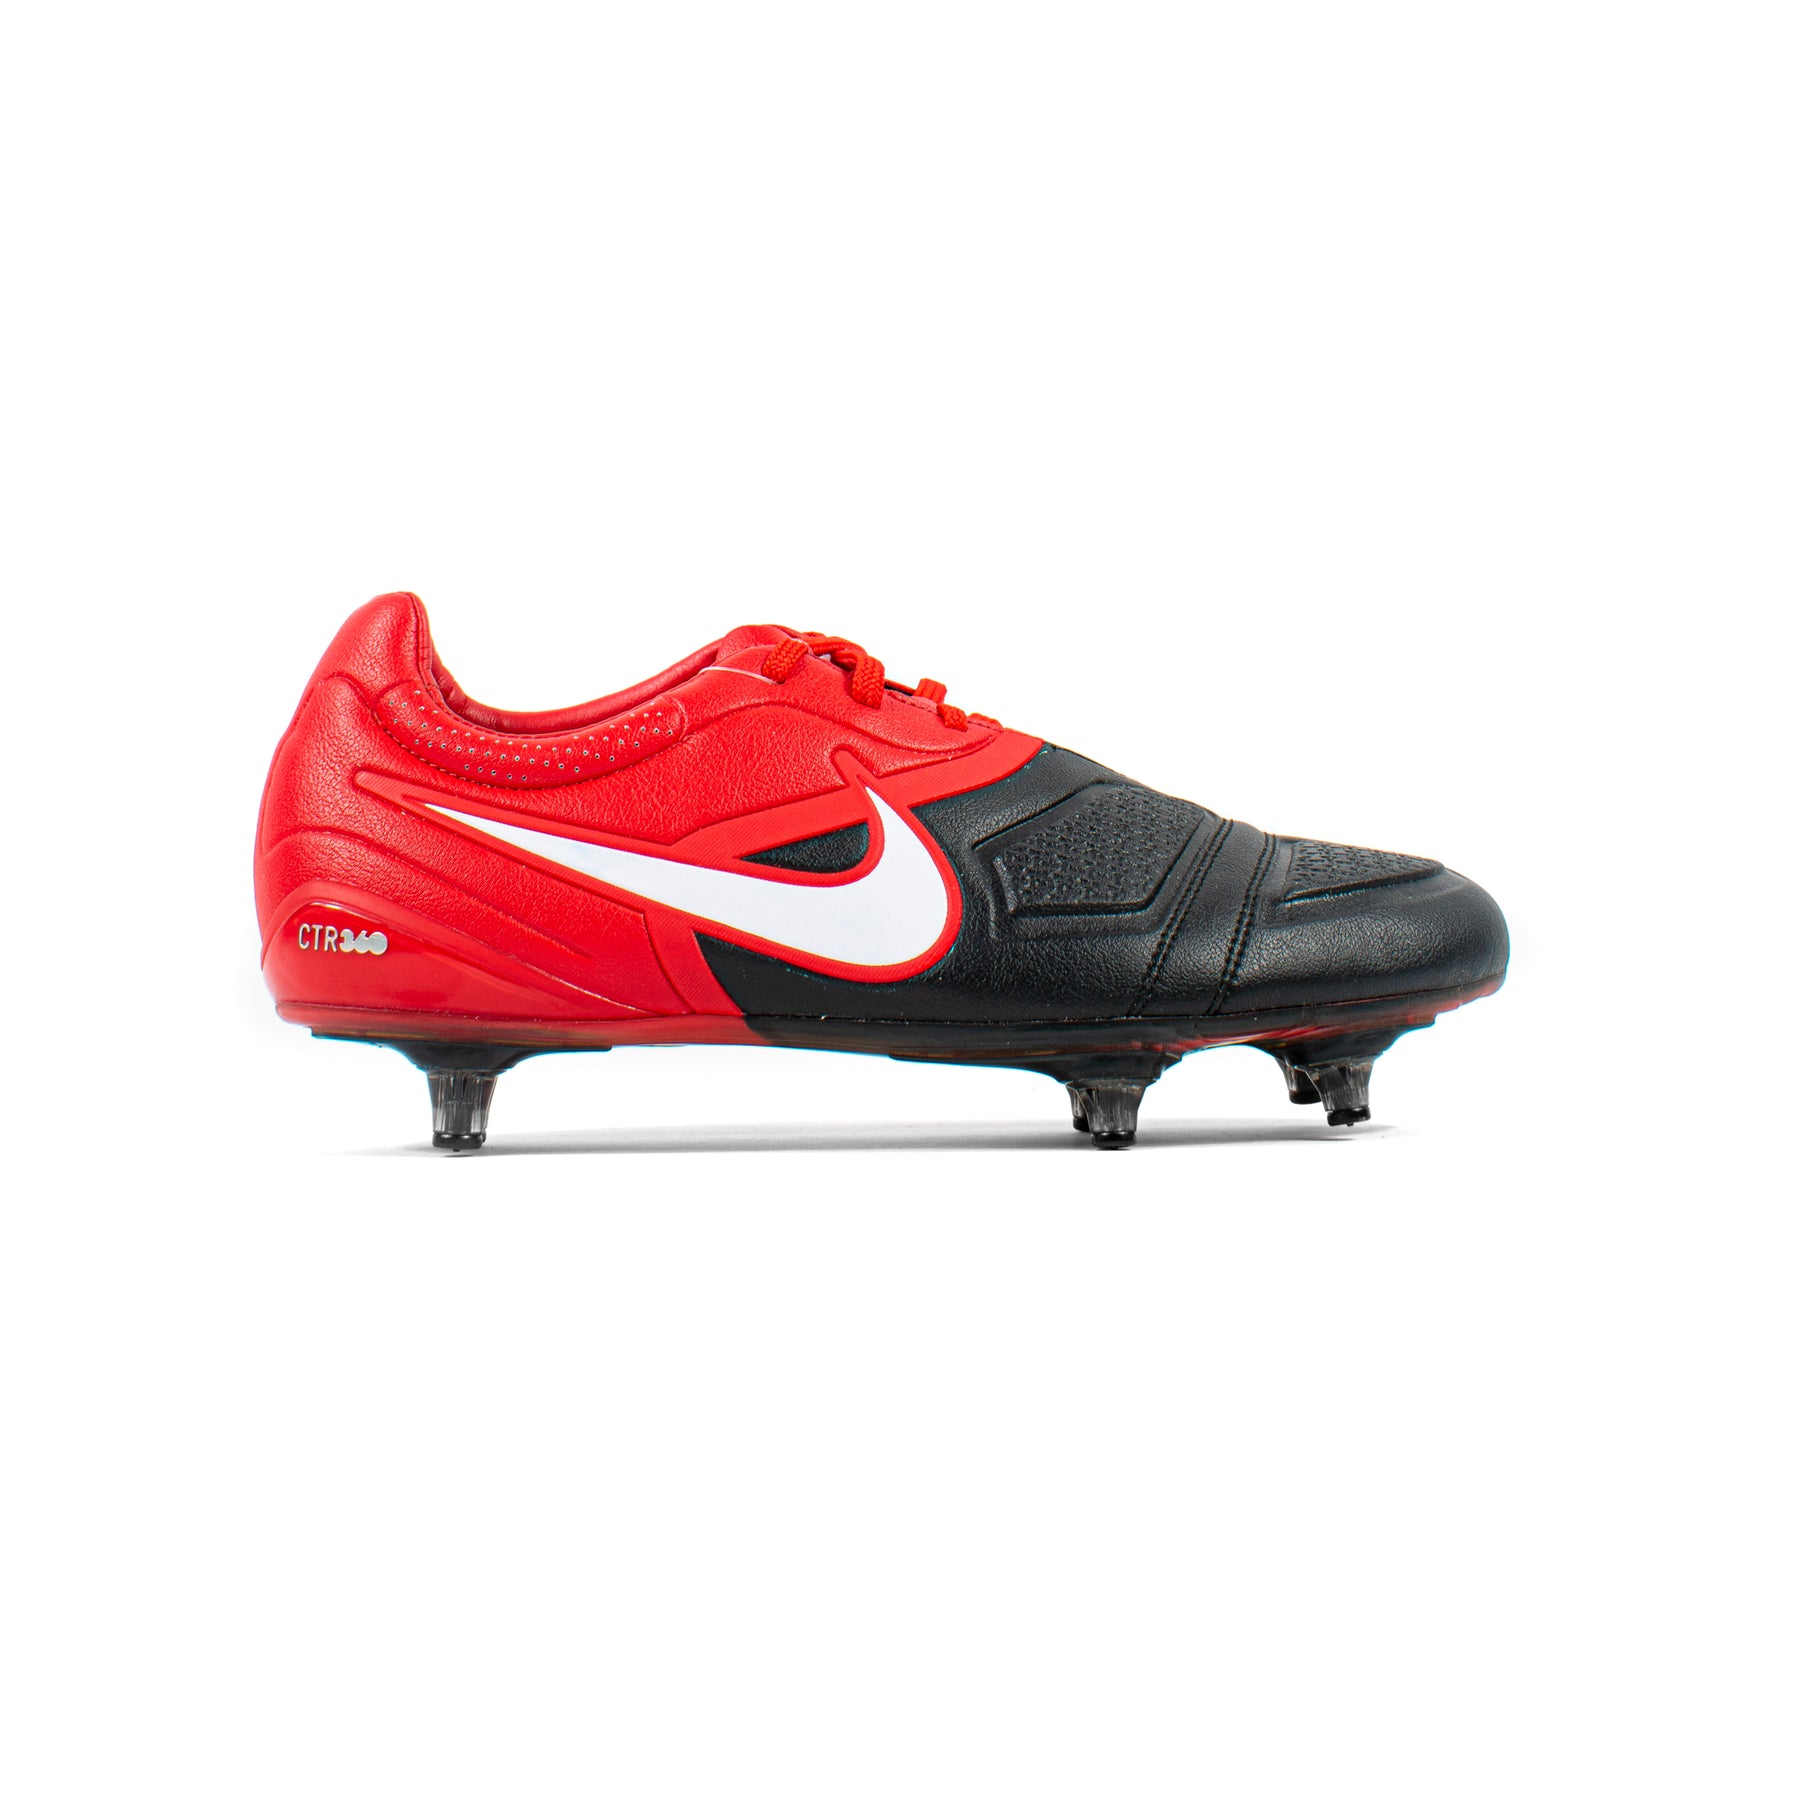 Nike CTR360 Maestri Black SG – Classic Soccer Cleats